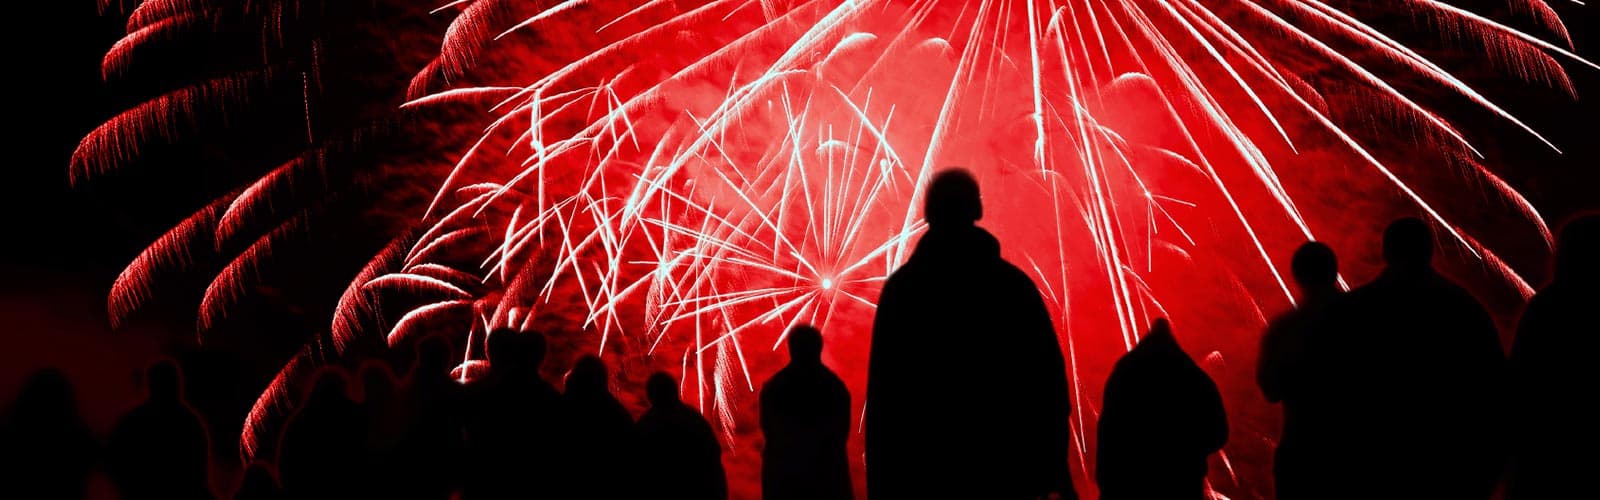 Iowans celebrating 4th of July with fireworks | Eye Saf